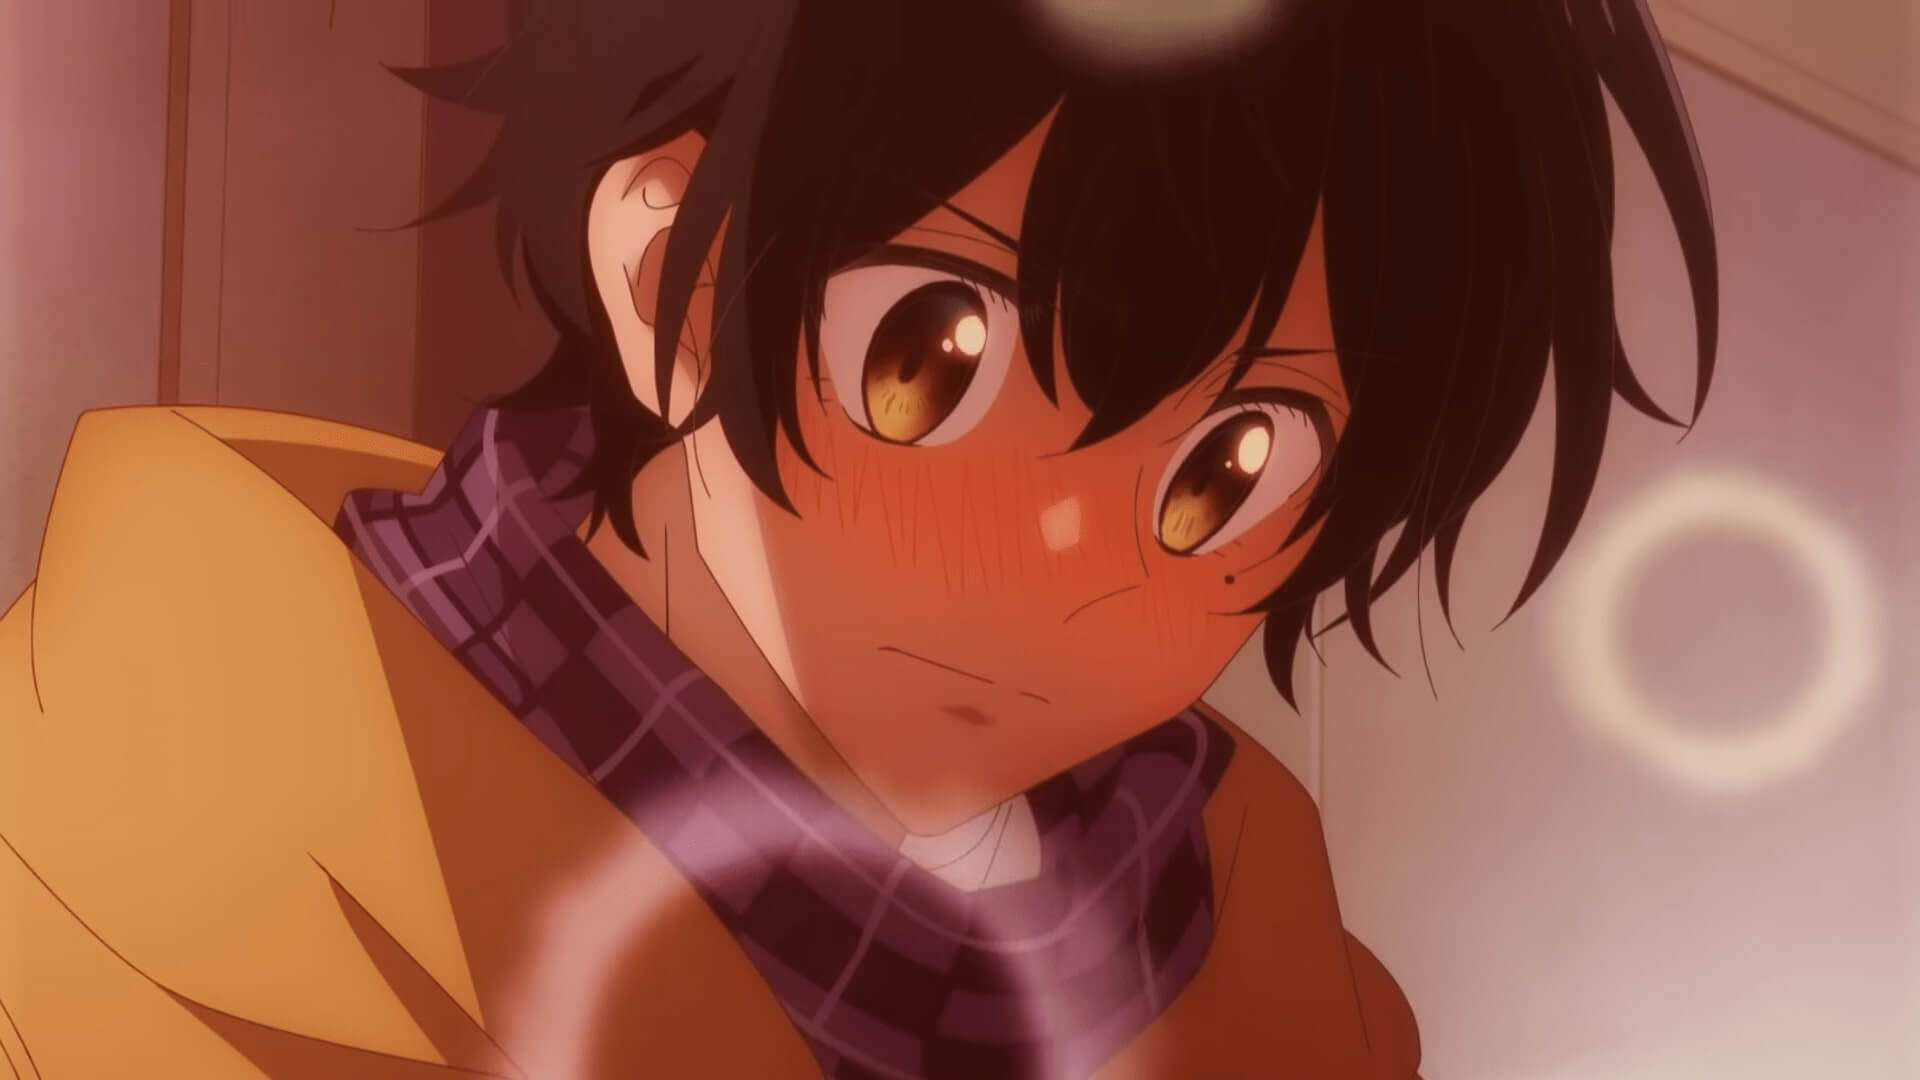 Sasaki and Miyano: Anime Boys Love tem estreia marcada para